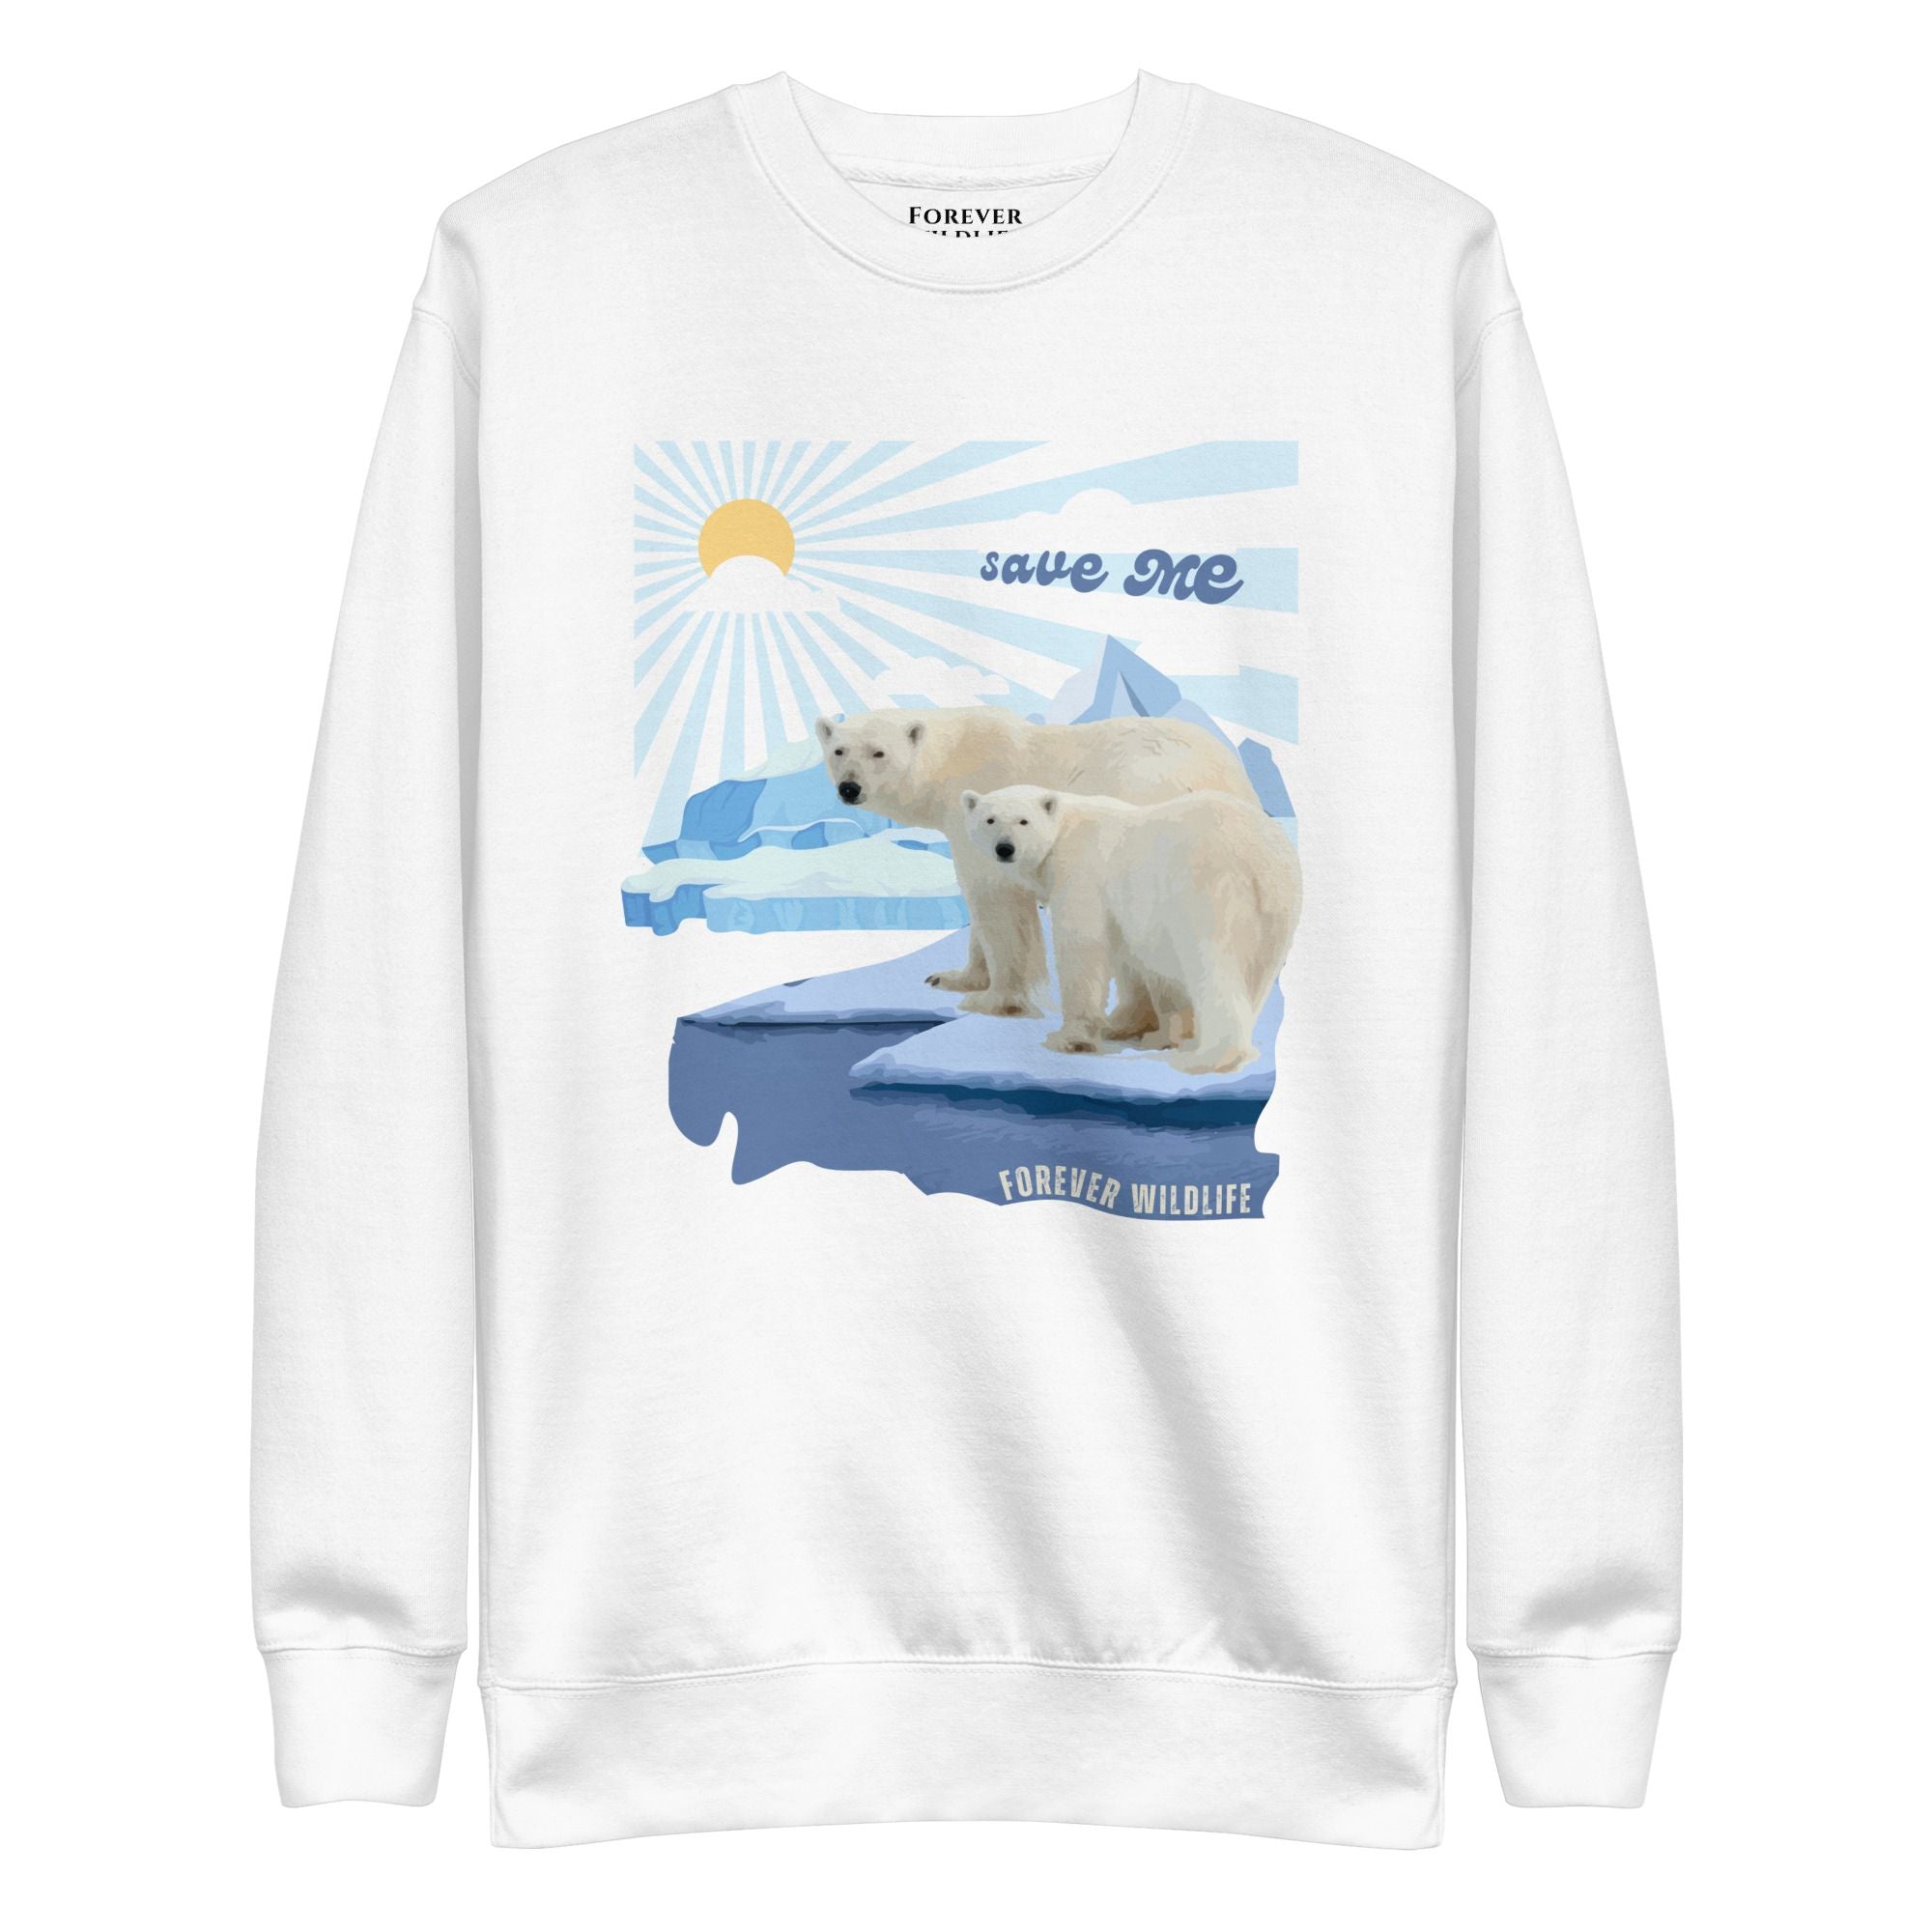 Polar Bears Sweatshirt in White-Premium Wildlife Animal Inspiration Sweatshirt Design with 'Save Me' text, part of Wildlife Sweatshirts & Clothing from Forever Wildlife.